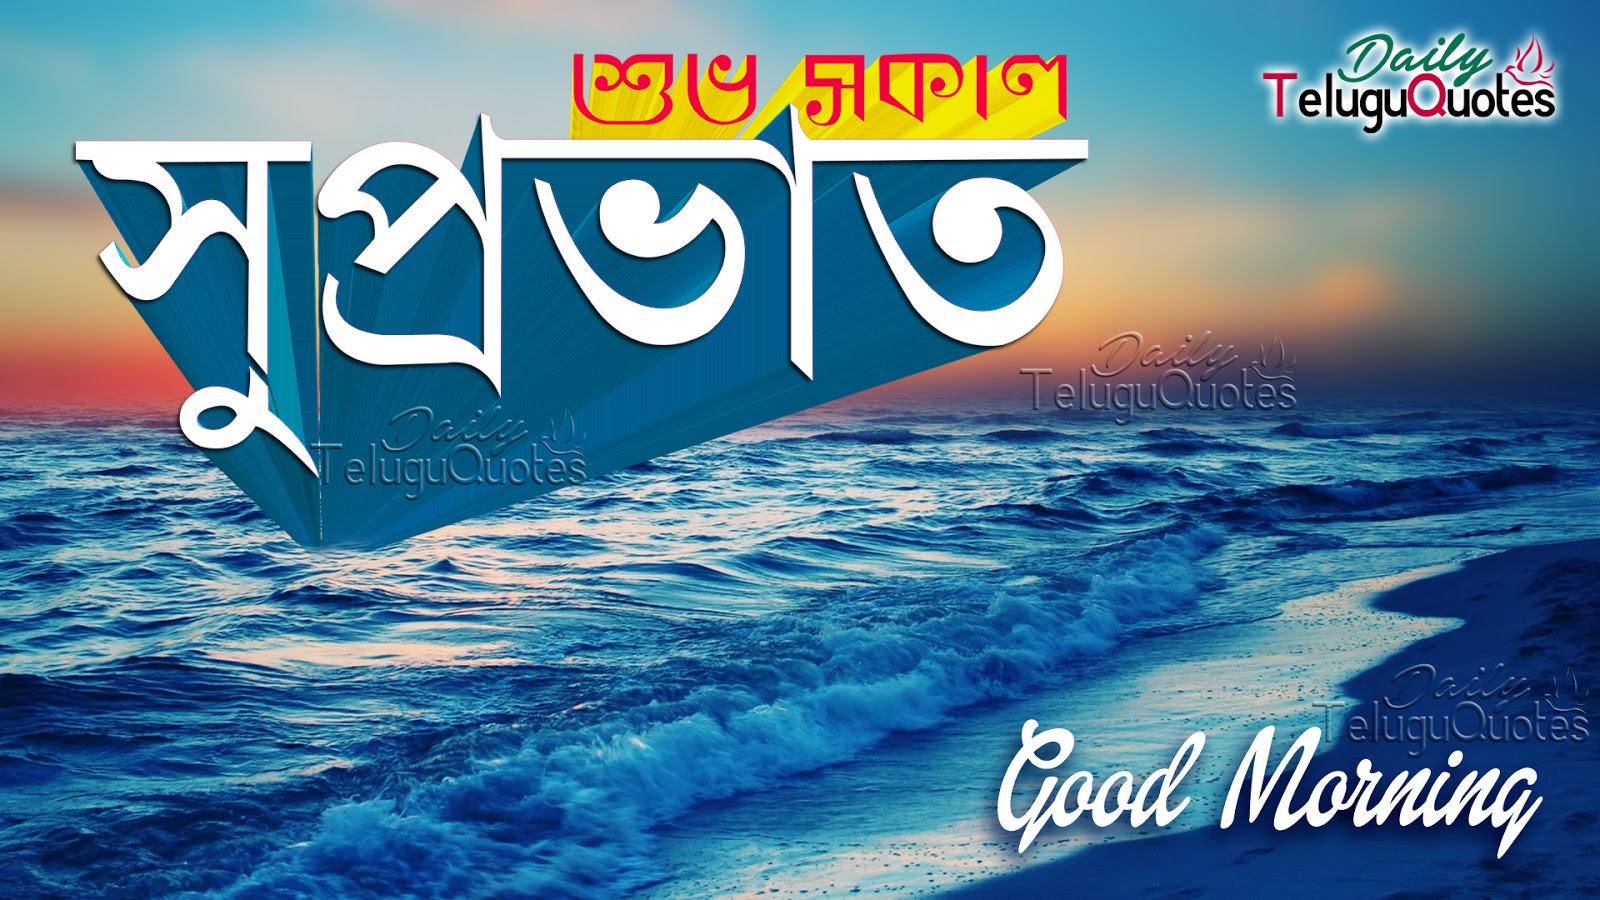 Bengali Shayari Wallpaper Pretty Pics Of The Ocean 840710